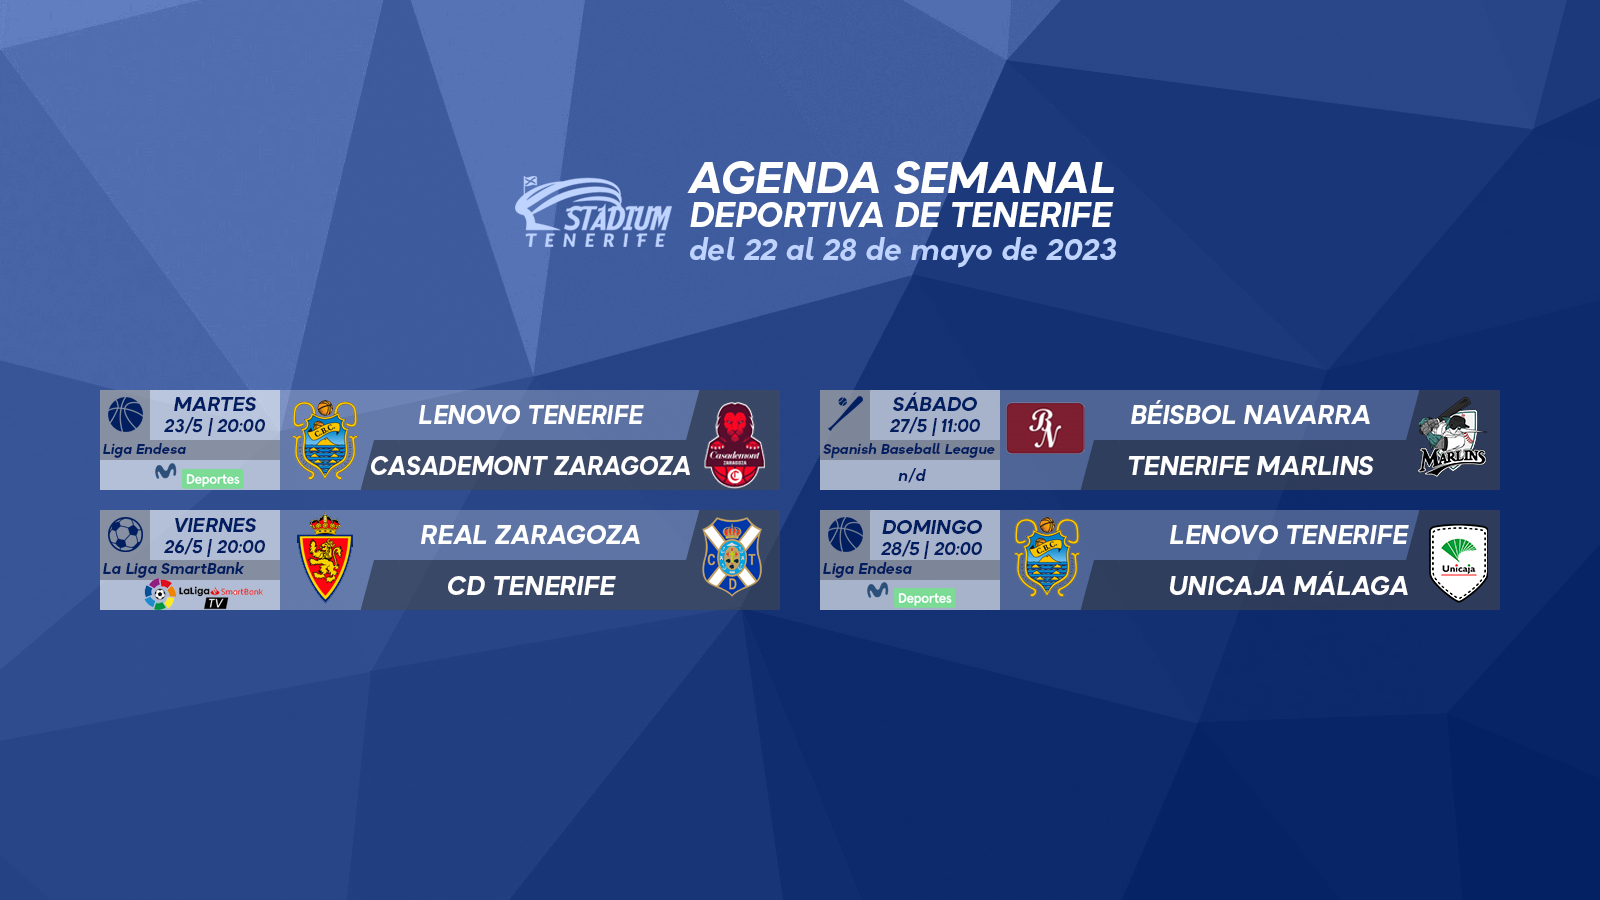 Agenda Semanal Deportiva de Tenerife (22 al 28 de mayo)